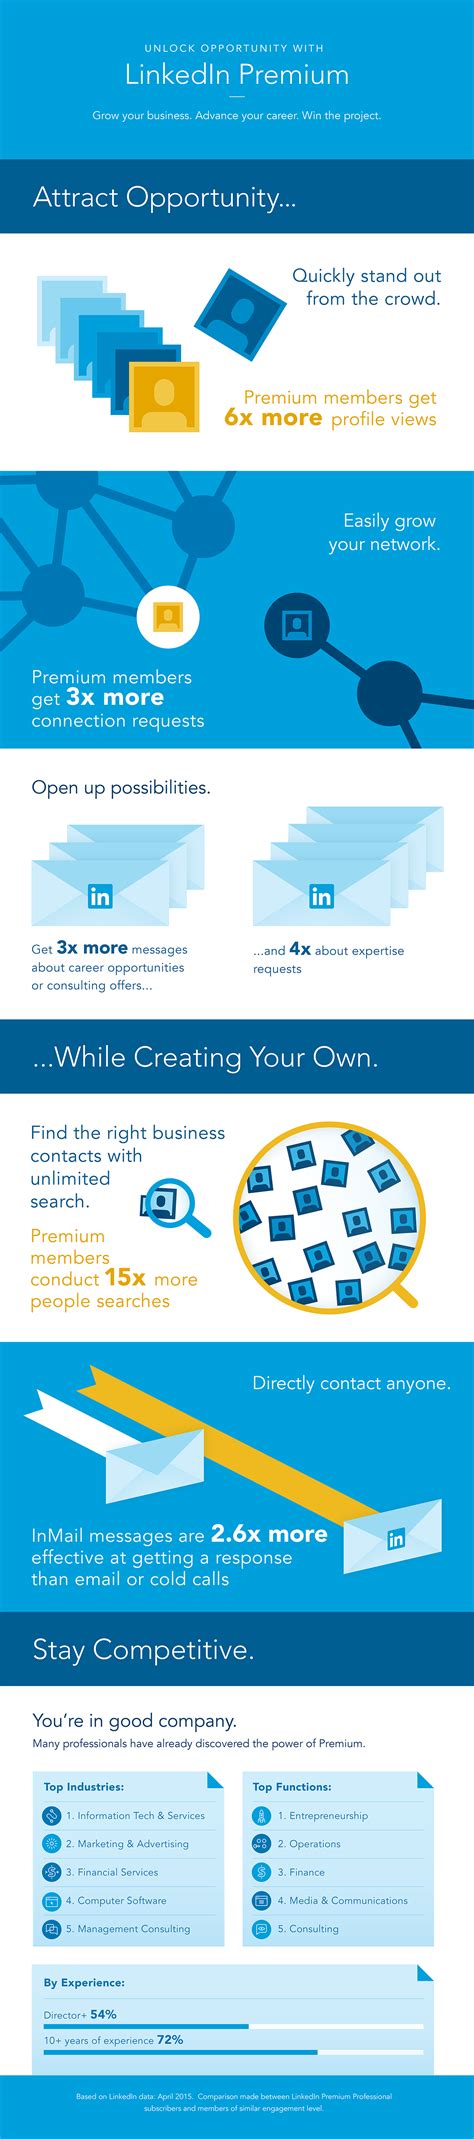 Linkedin Premium Professional Infographic